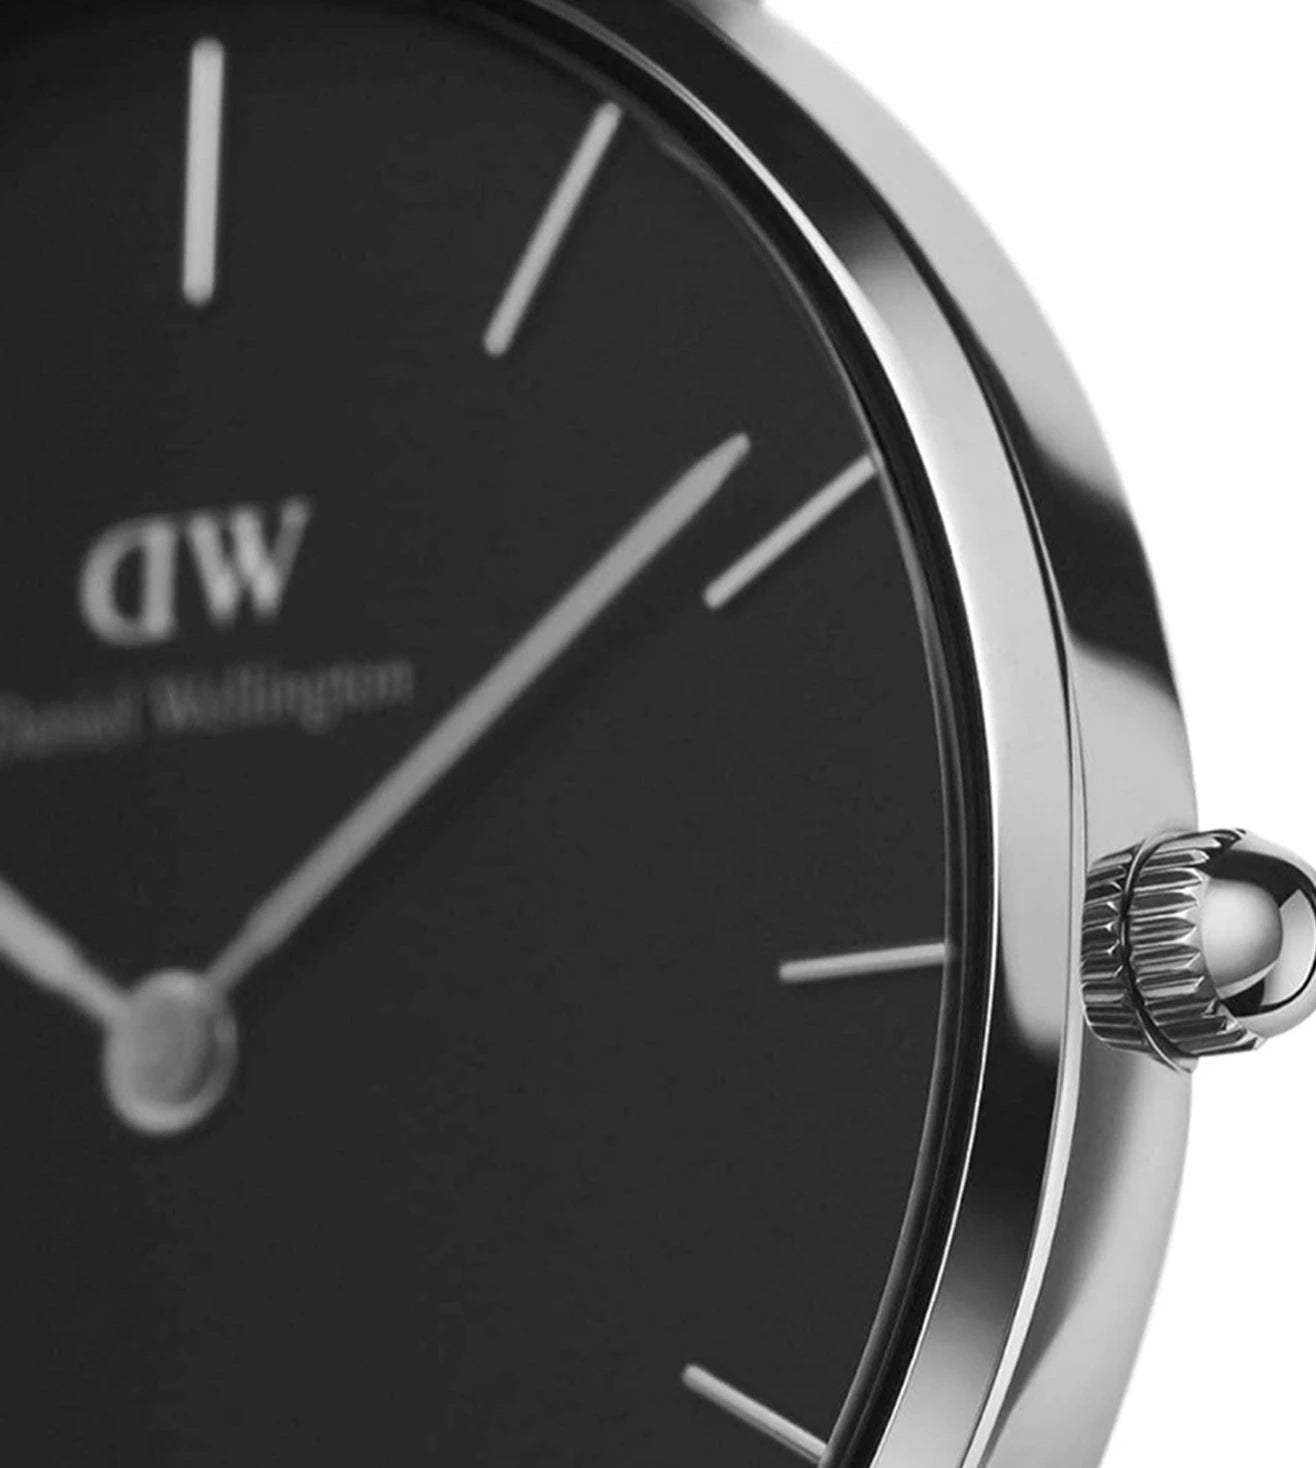 DW00100181 | DANIEL WELLINGTON Petite Analog Watch for Women